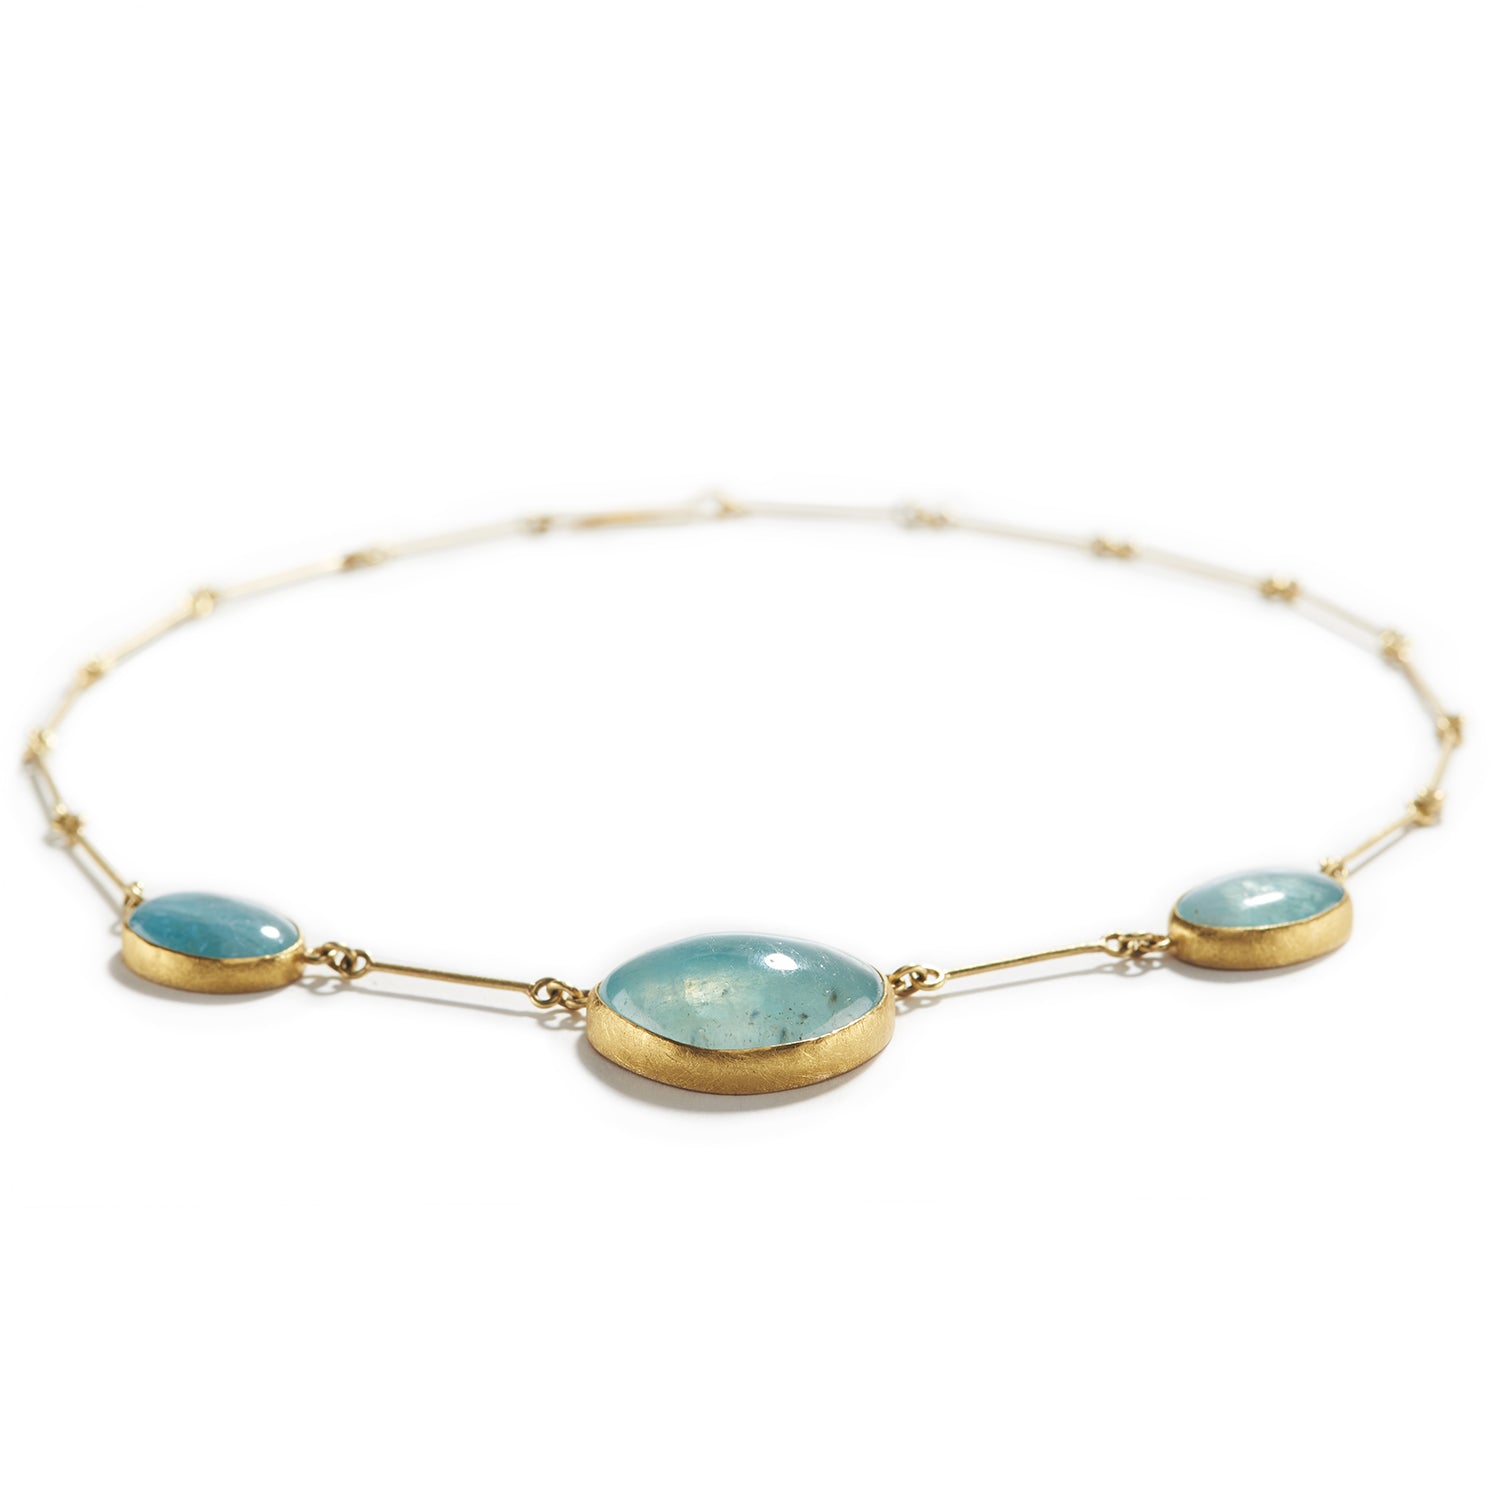 Necklace with Aqua Globes